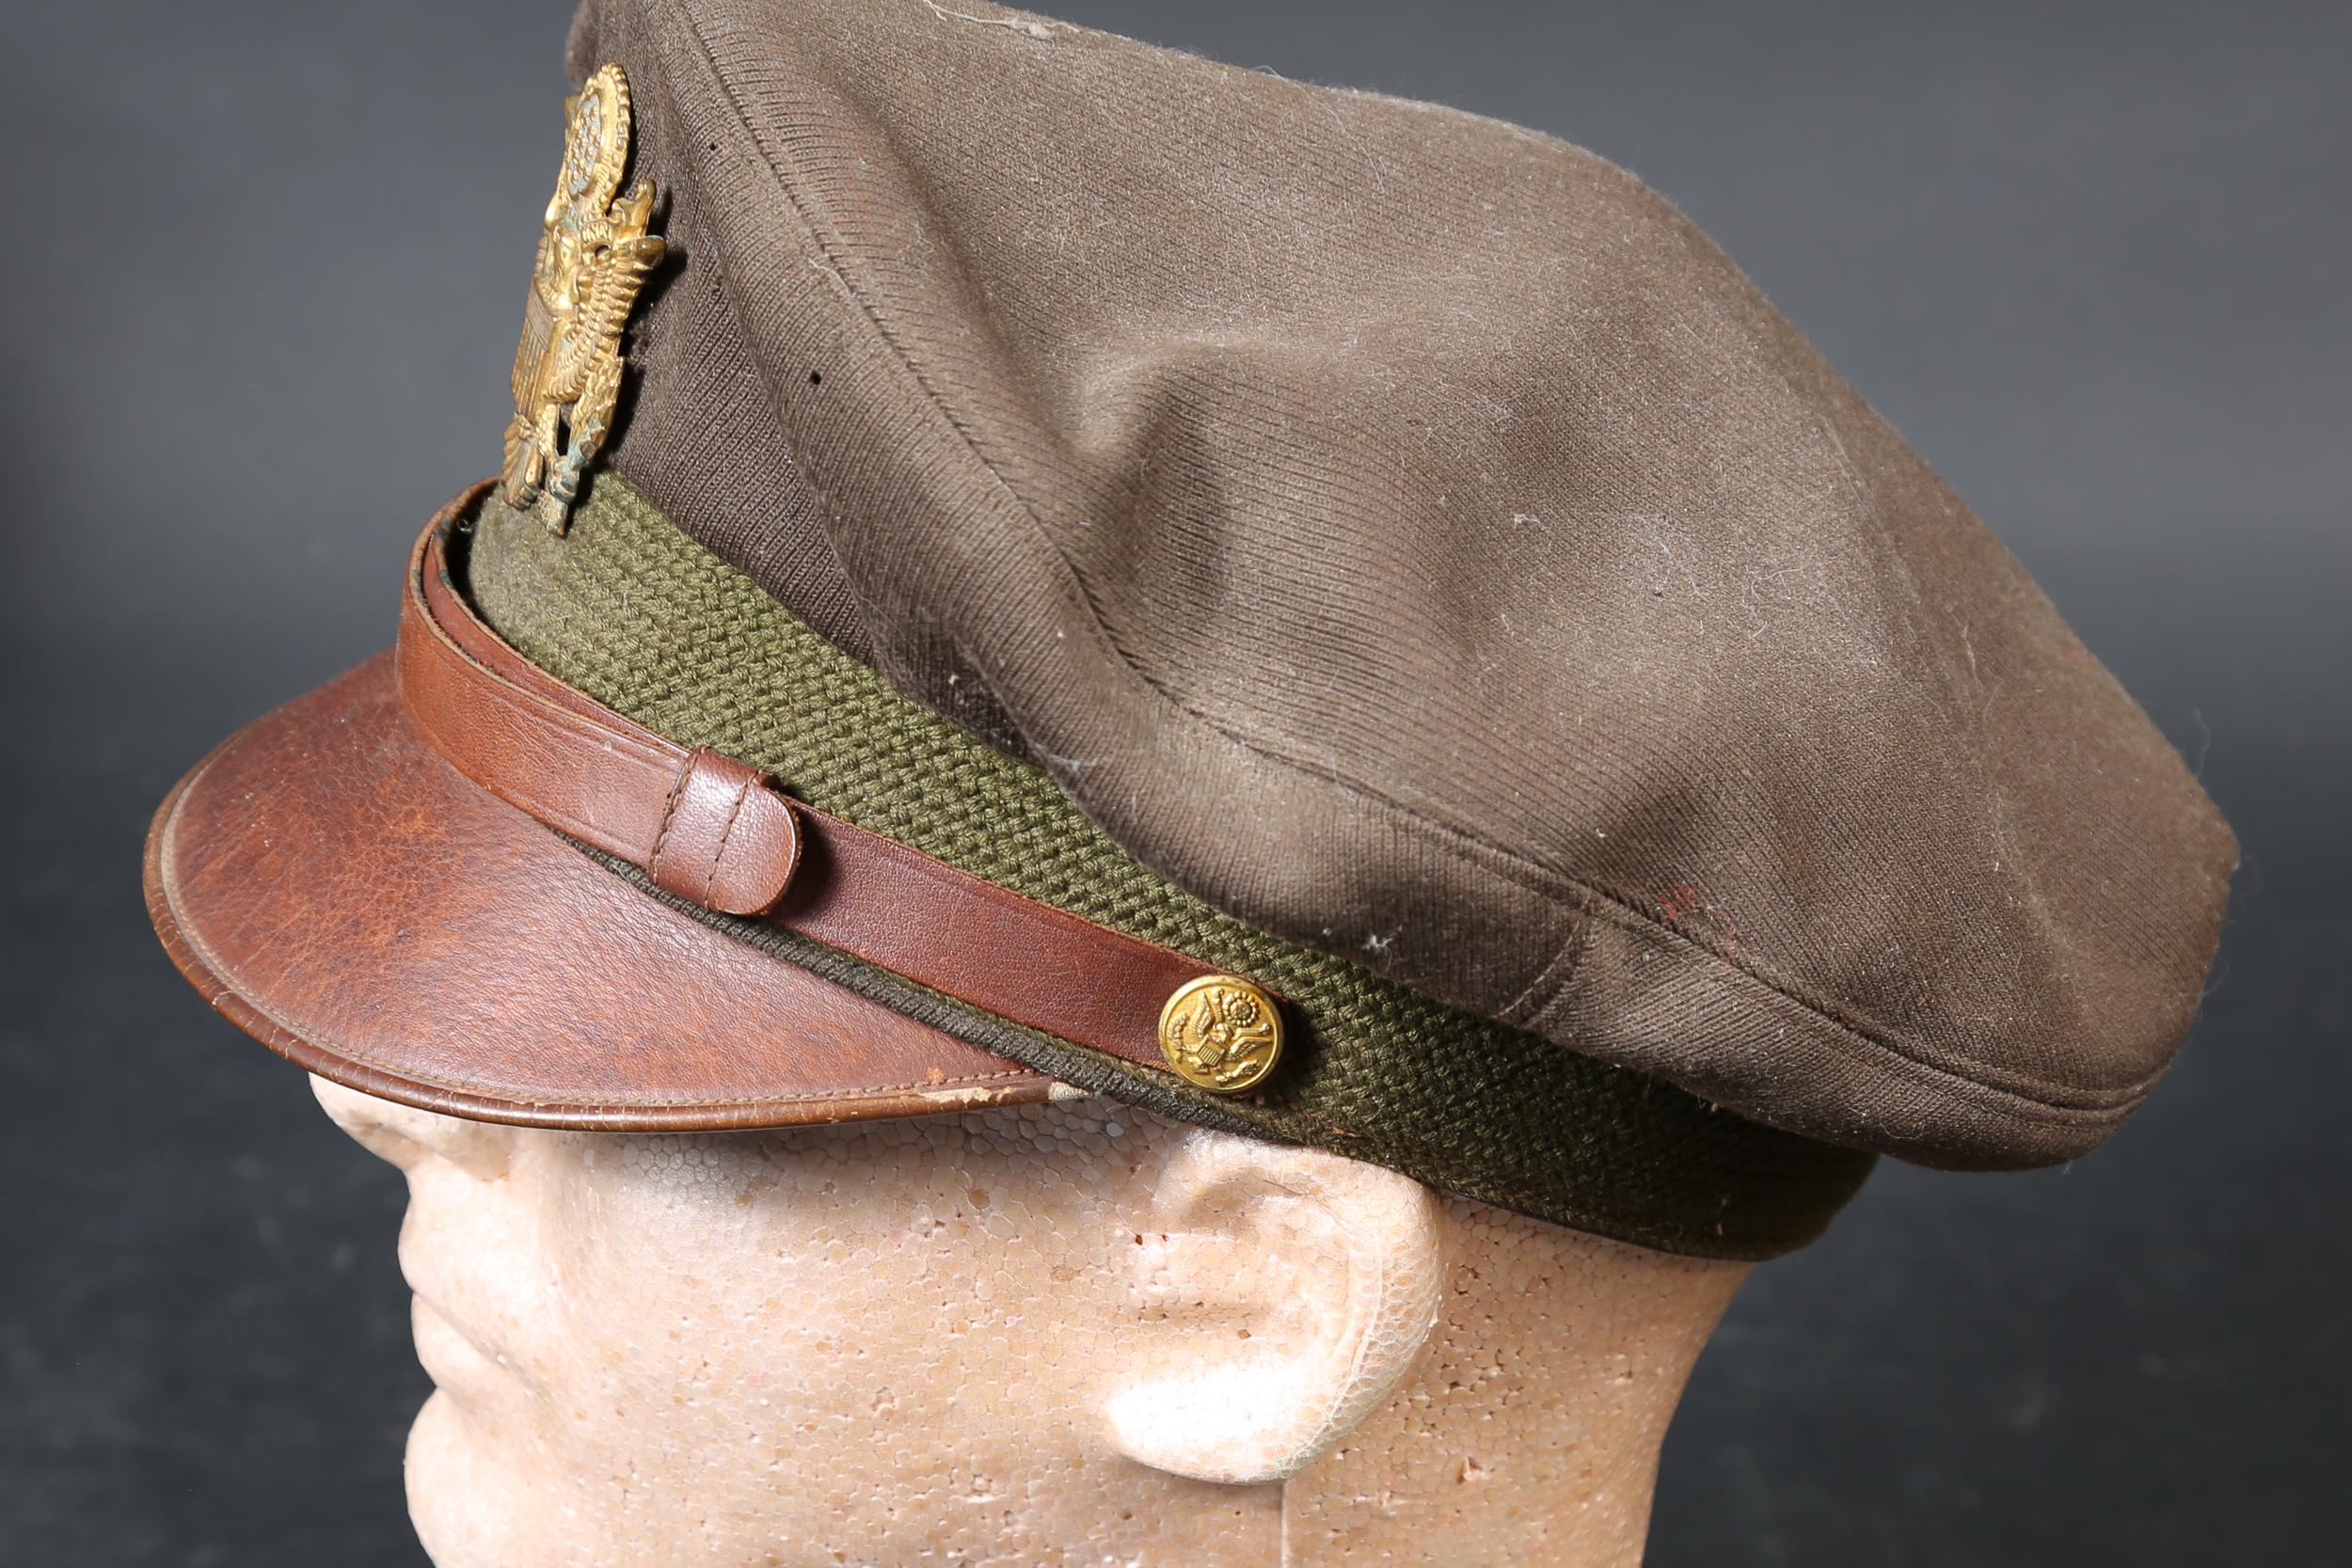 Military Officer crusher cap